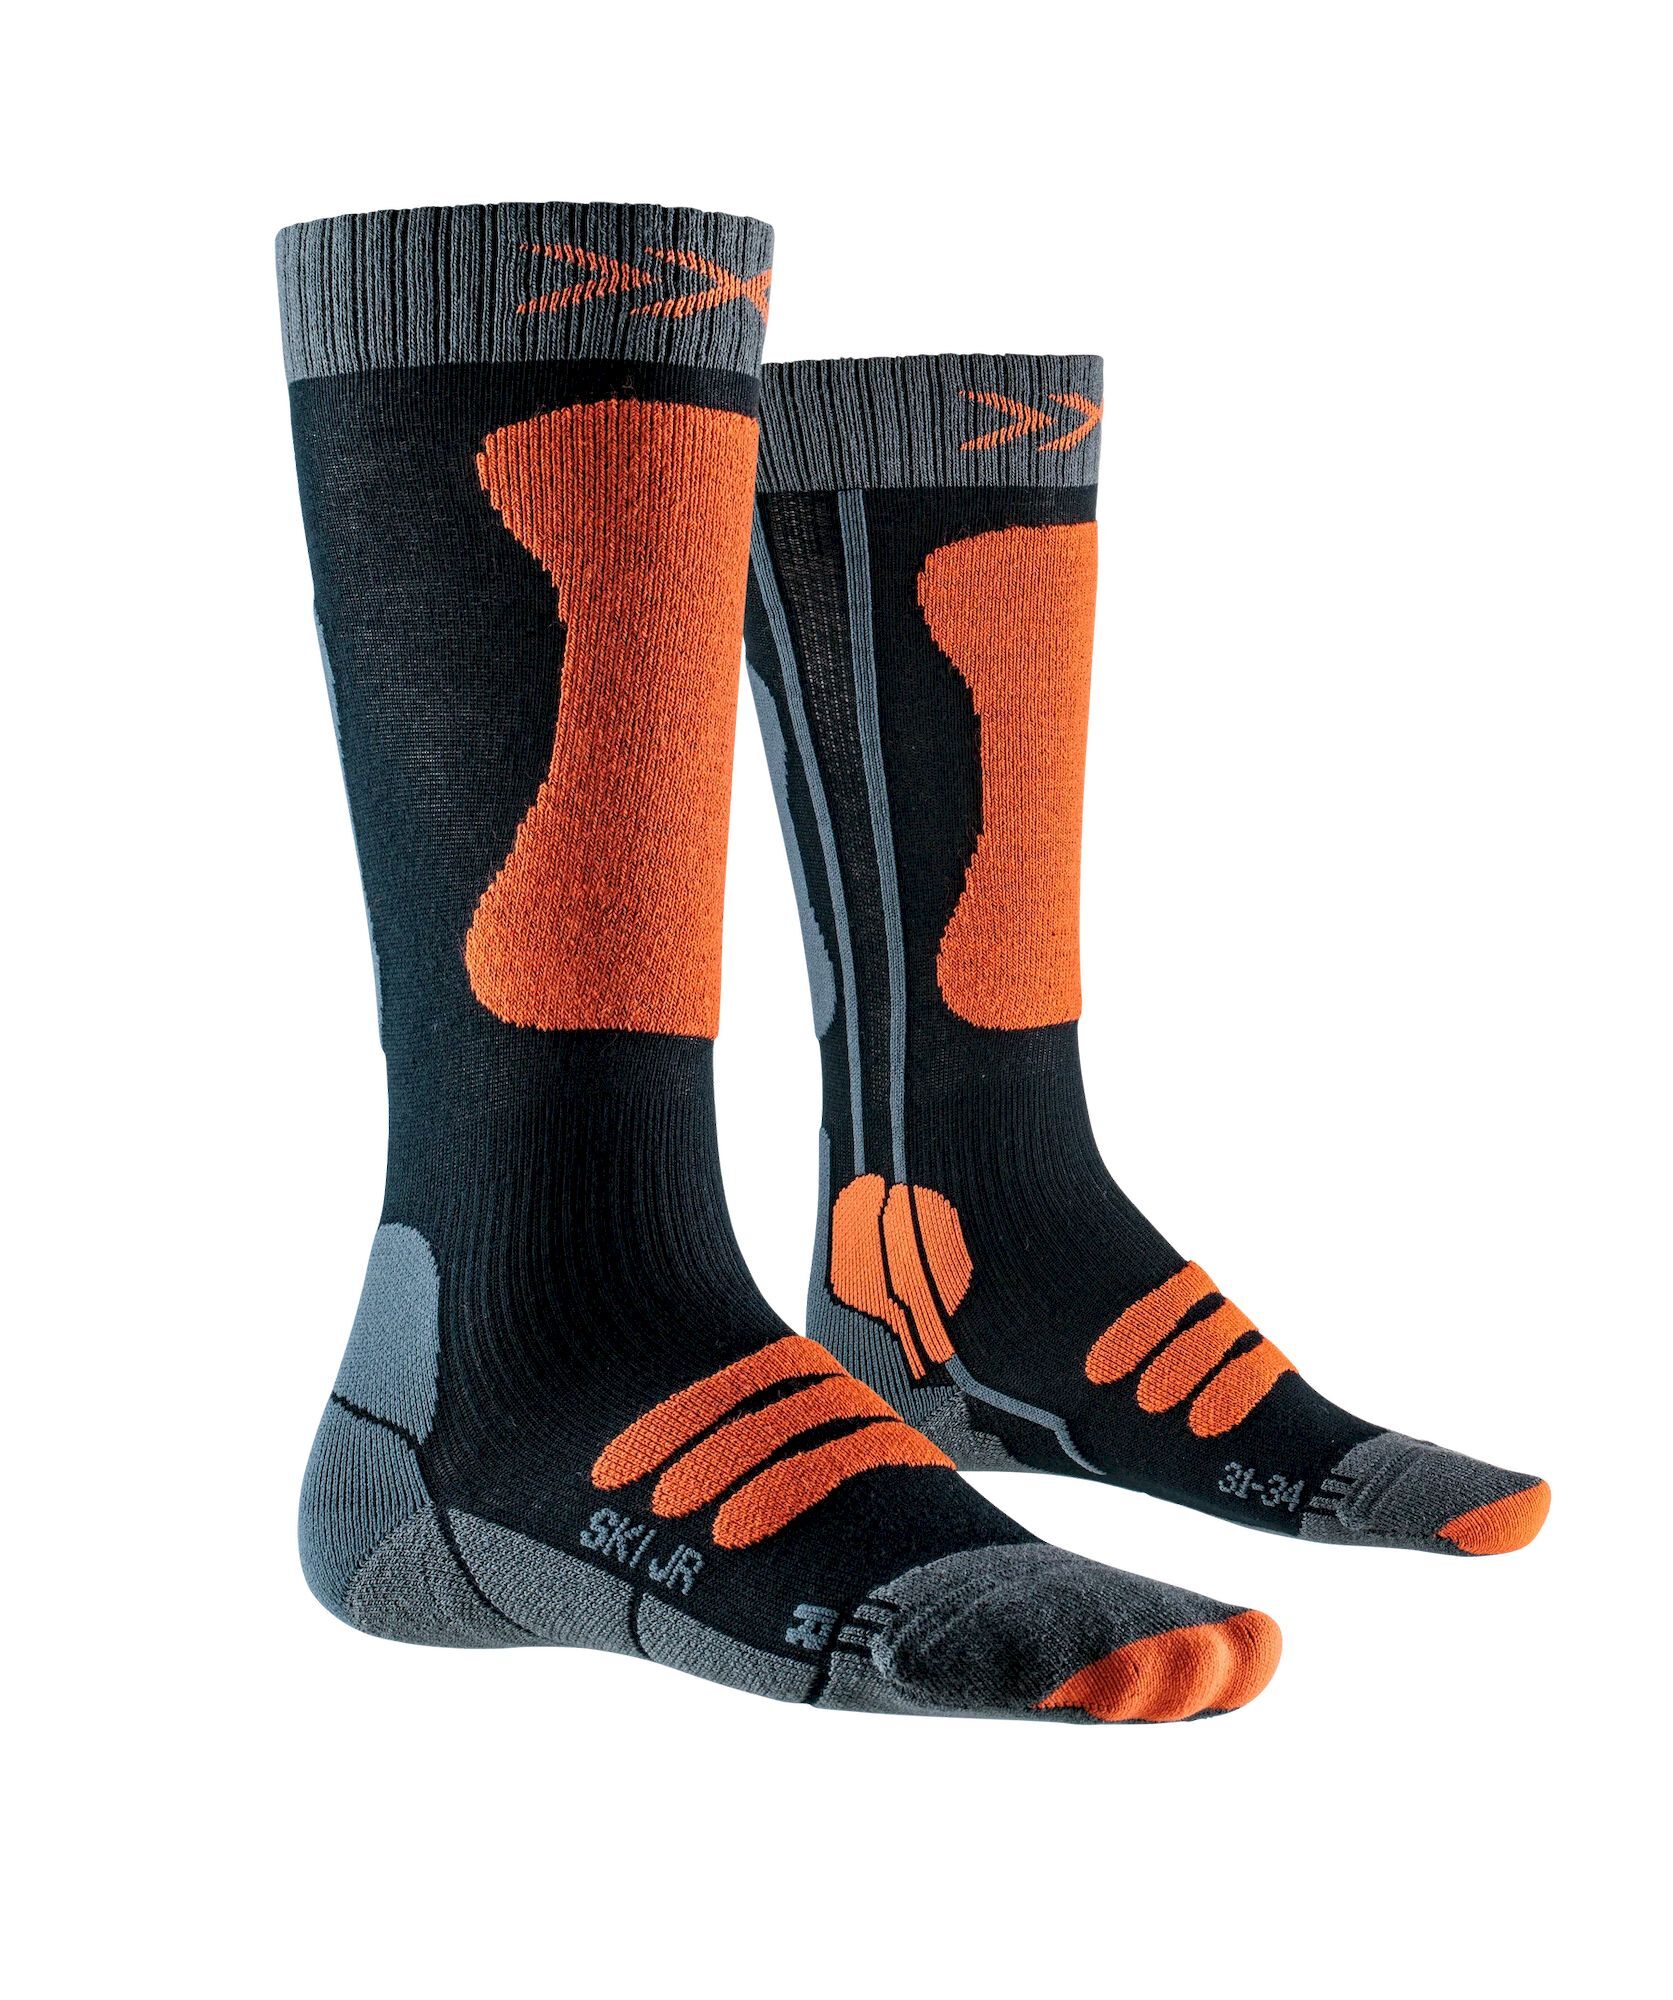 X-Socks Ski Junior 4.0 - Calze da sci - Bambino